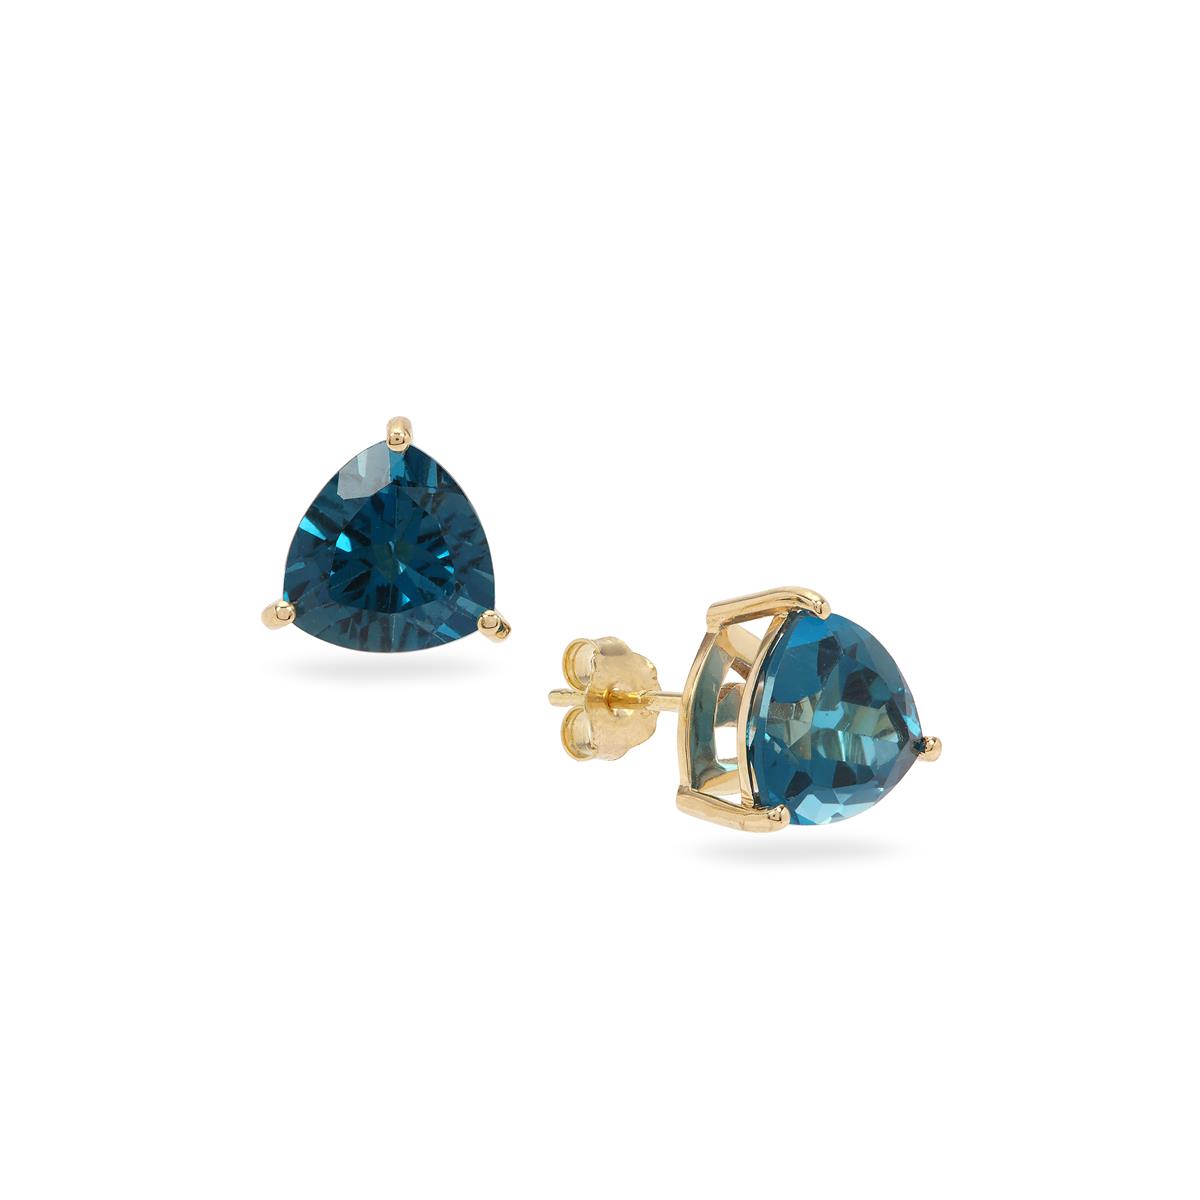 Santa Fe Jewelry Doves London Blue Topaz Earrings With Diamonds